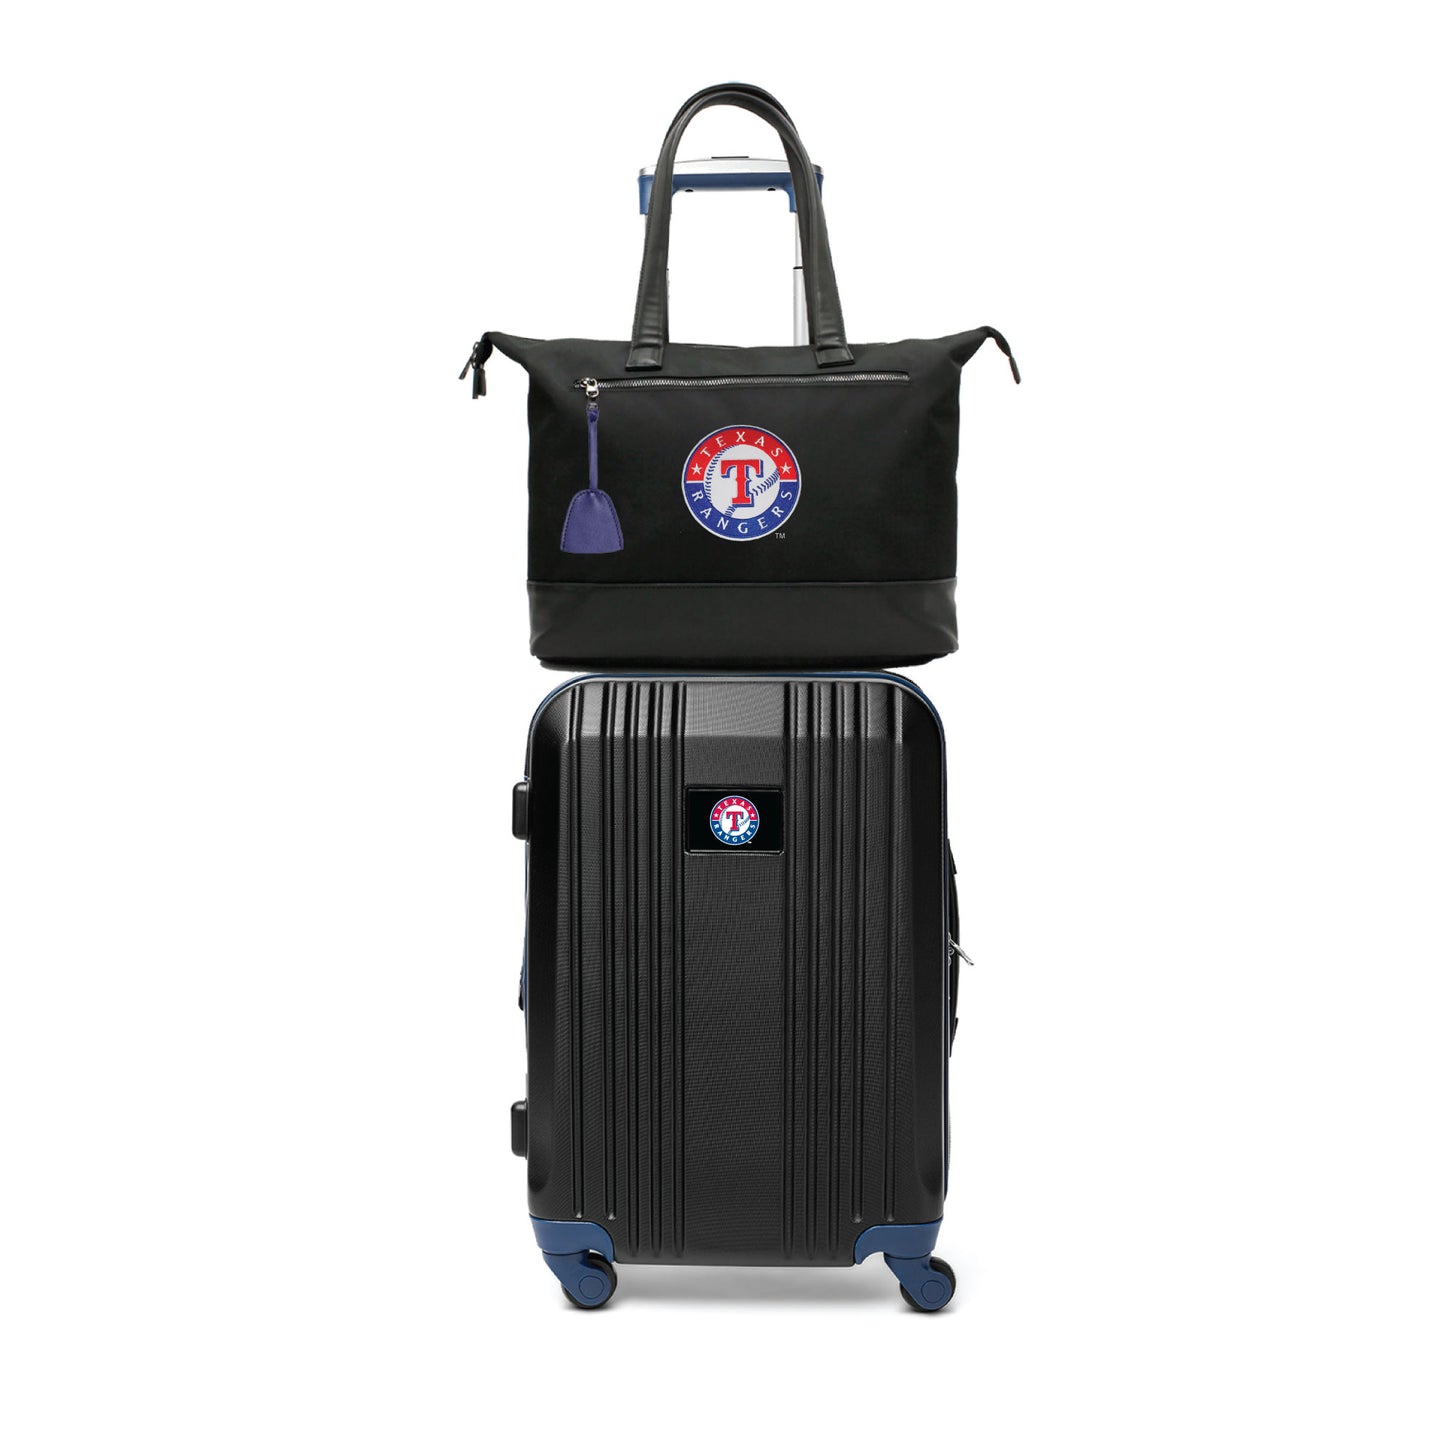 Texas Rangers Premium Laptop Tote Bag and Luggage Set